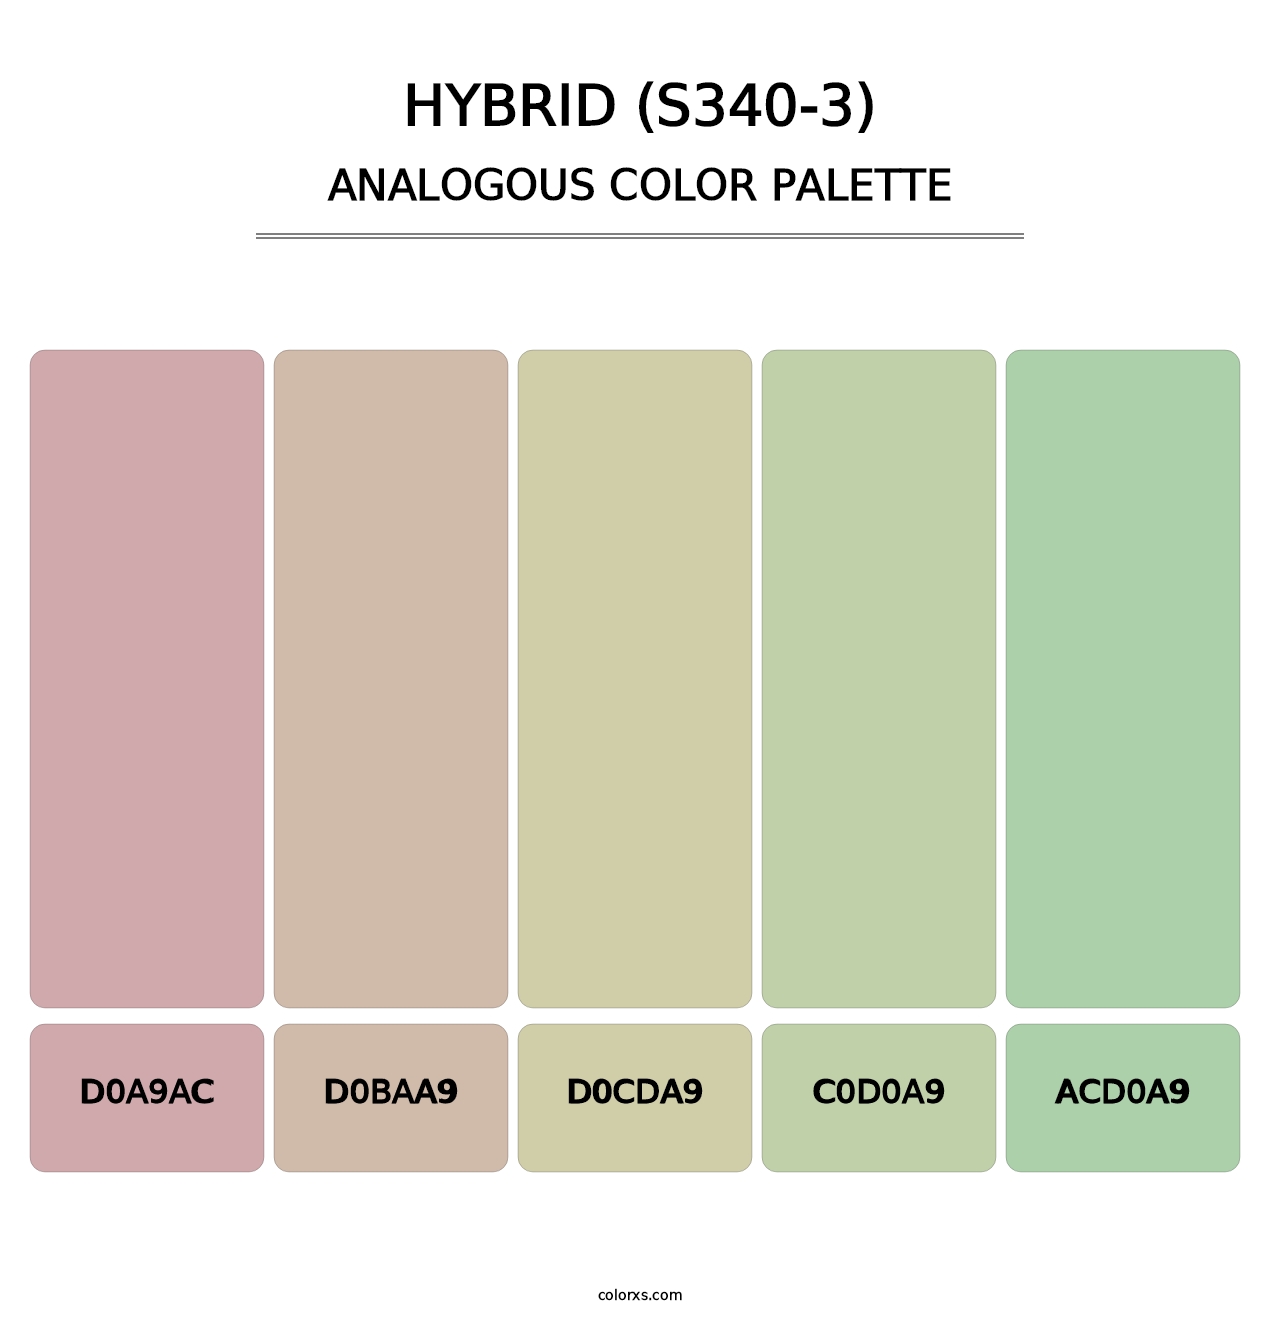 Hybrid (S340-3) - Analogous Color Palette